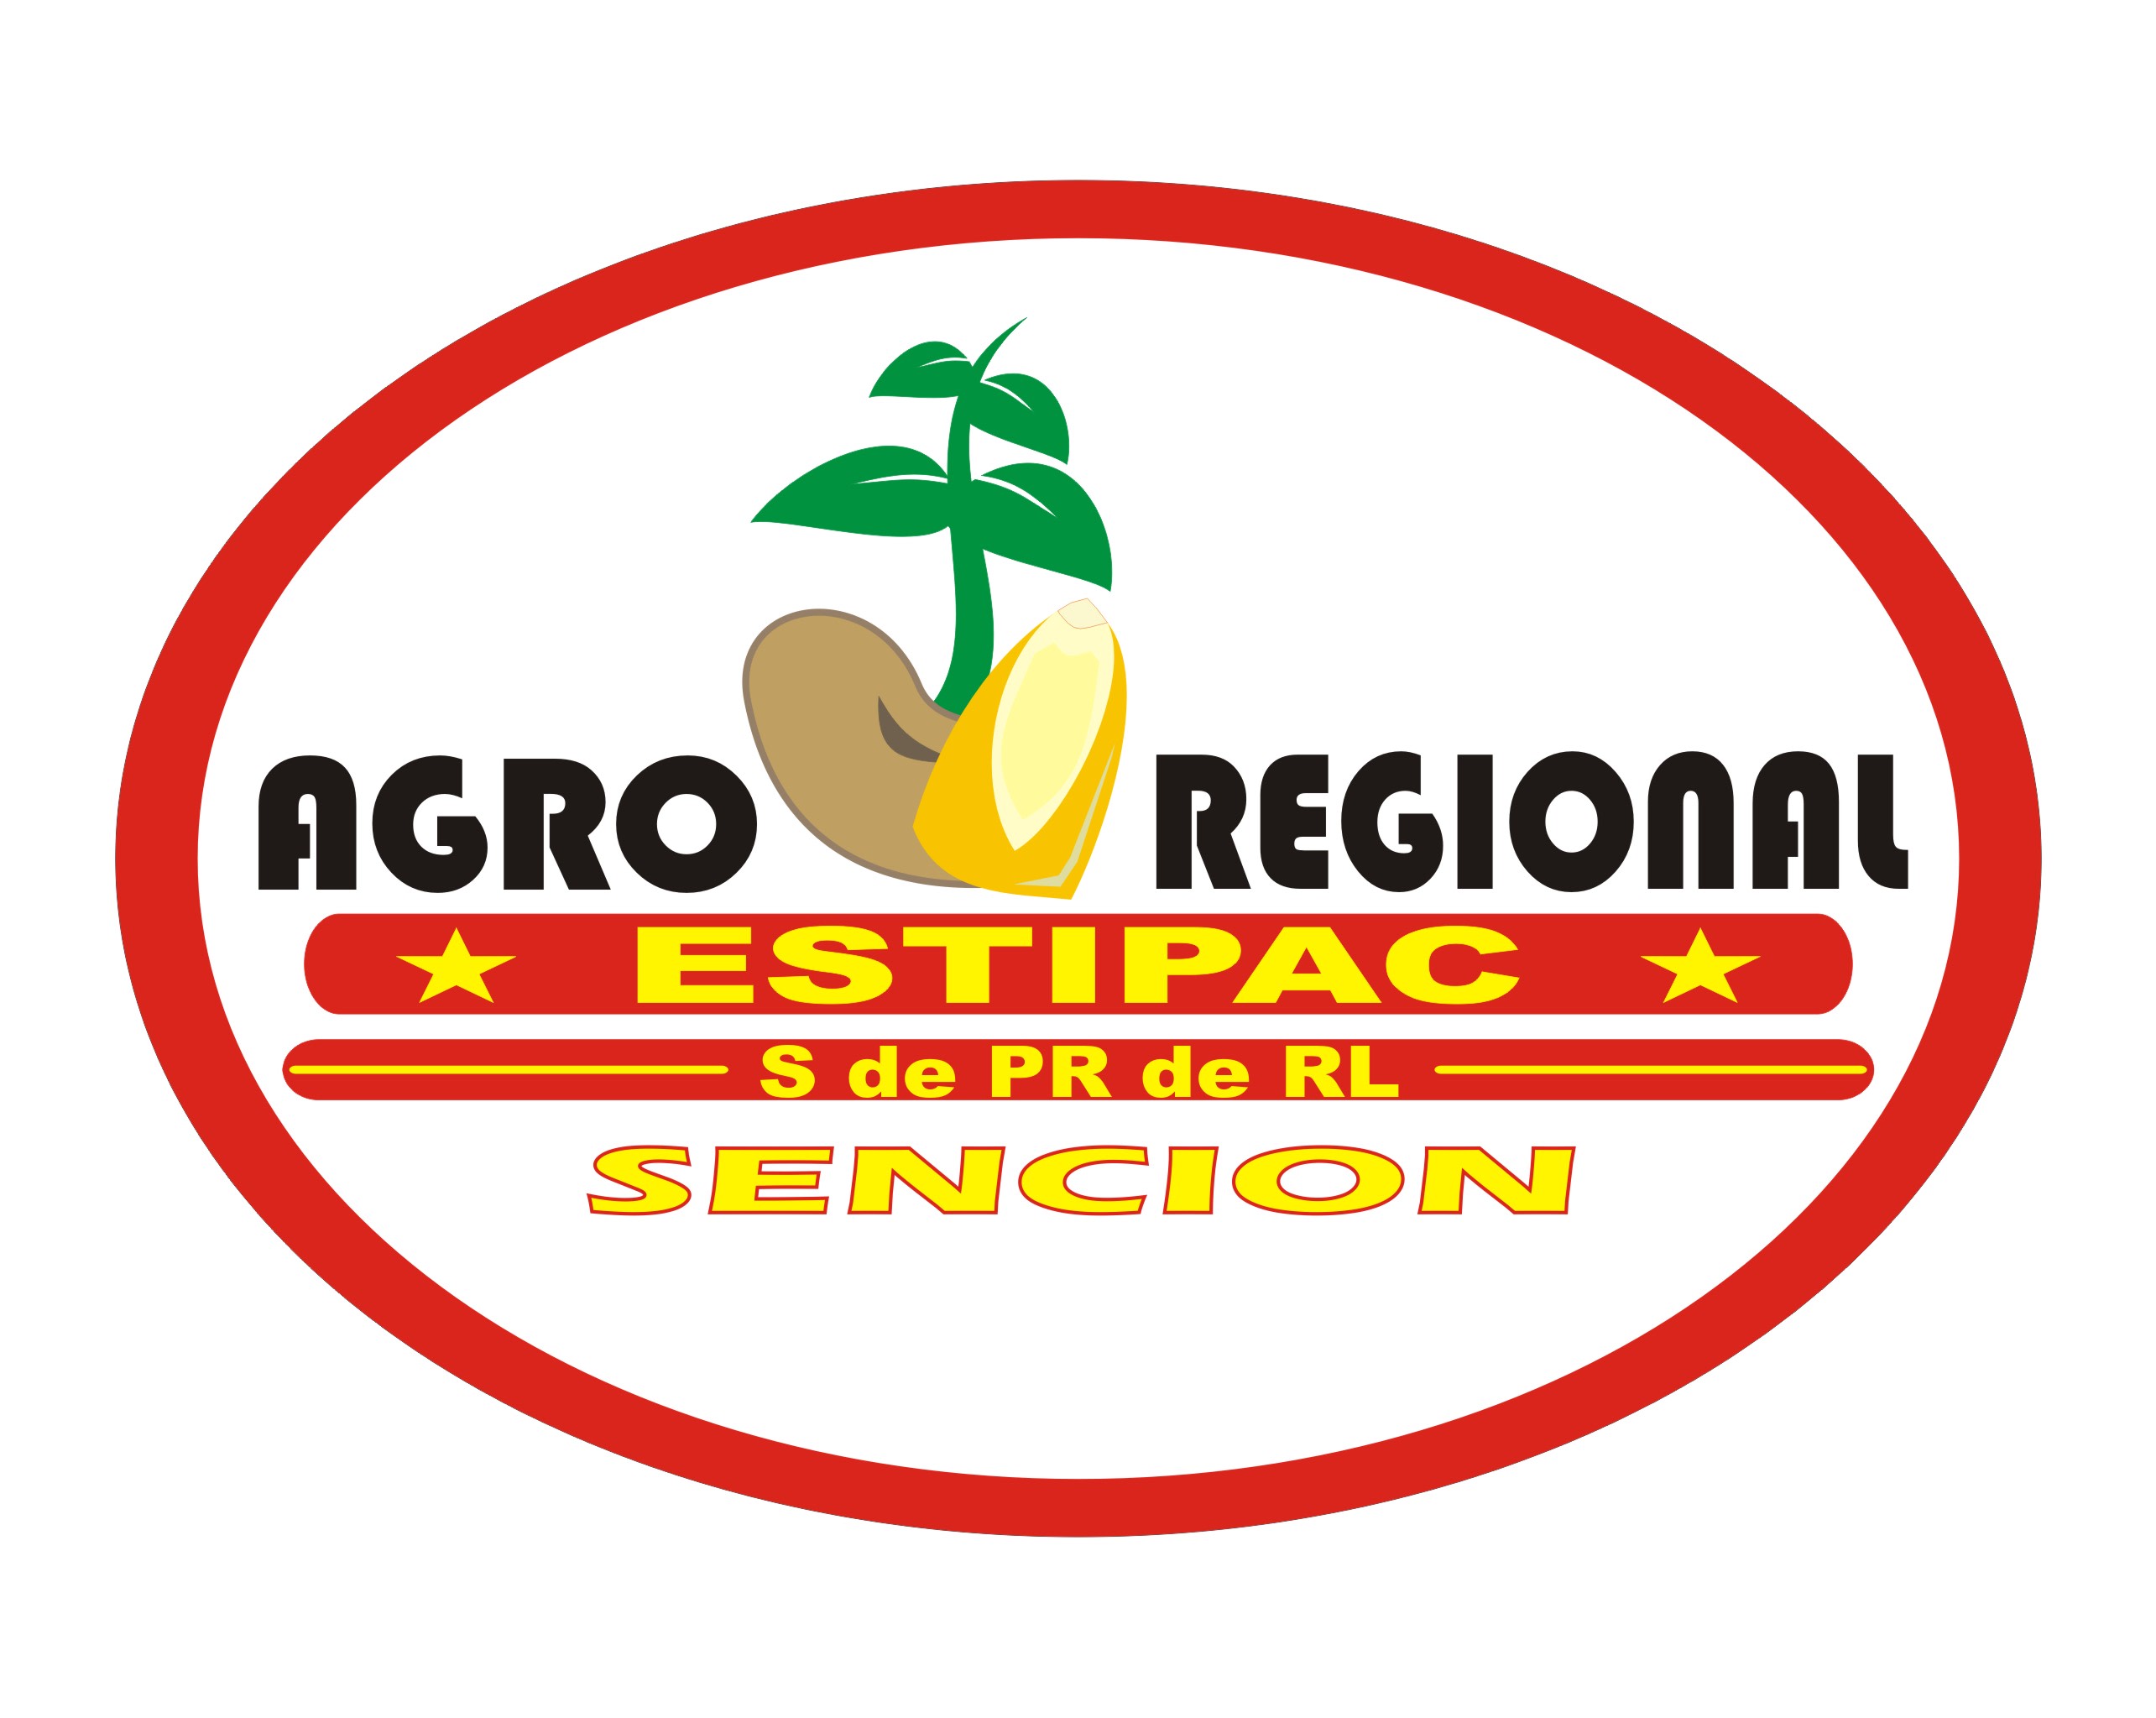 Agro Regional Estipac